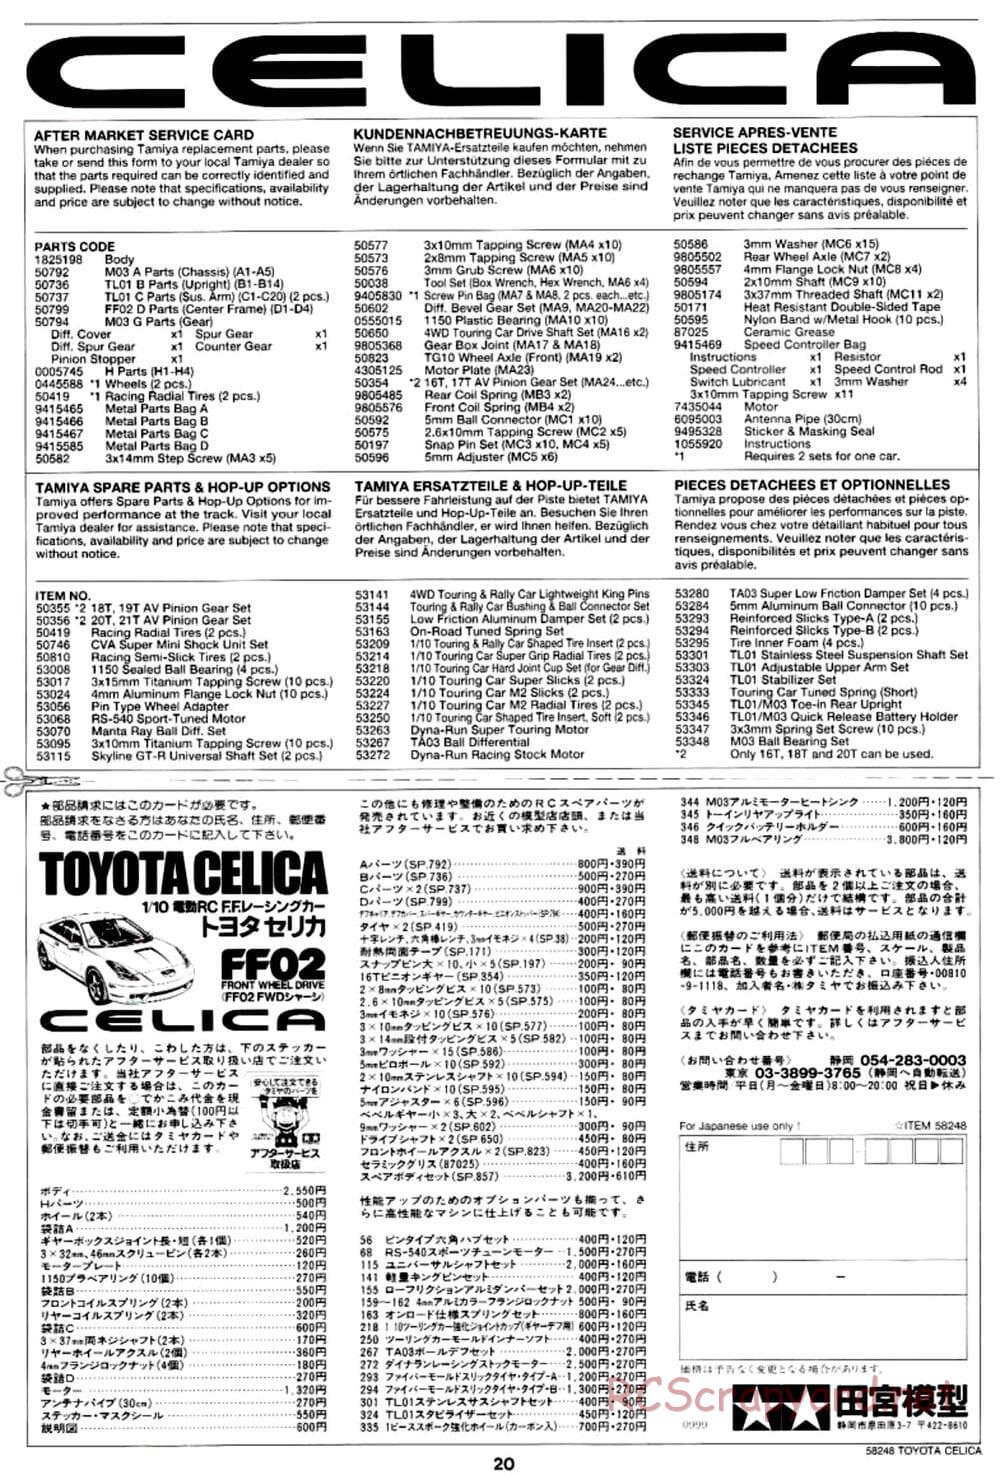 Tamiya - Toyota Celica - FF-02 Chassis - Manual - Page 20